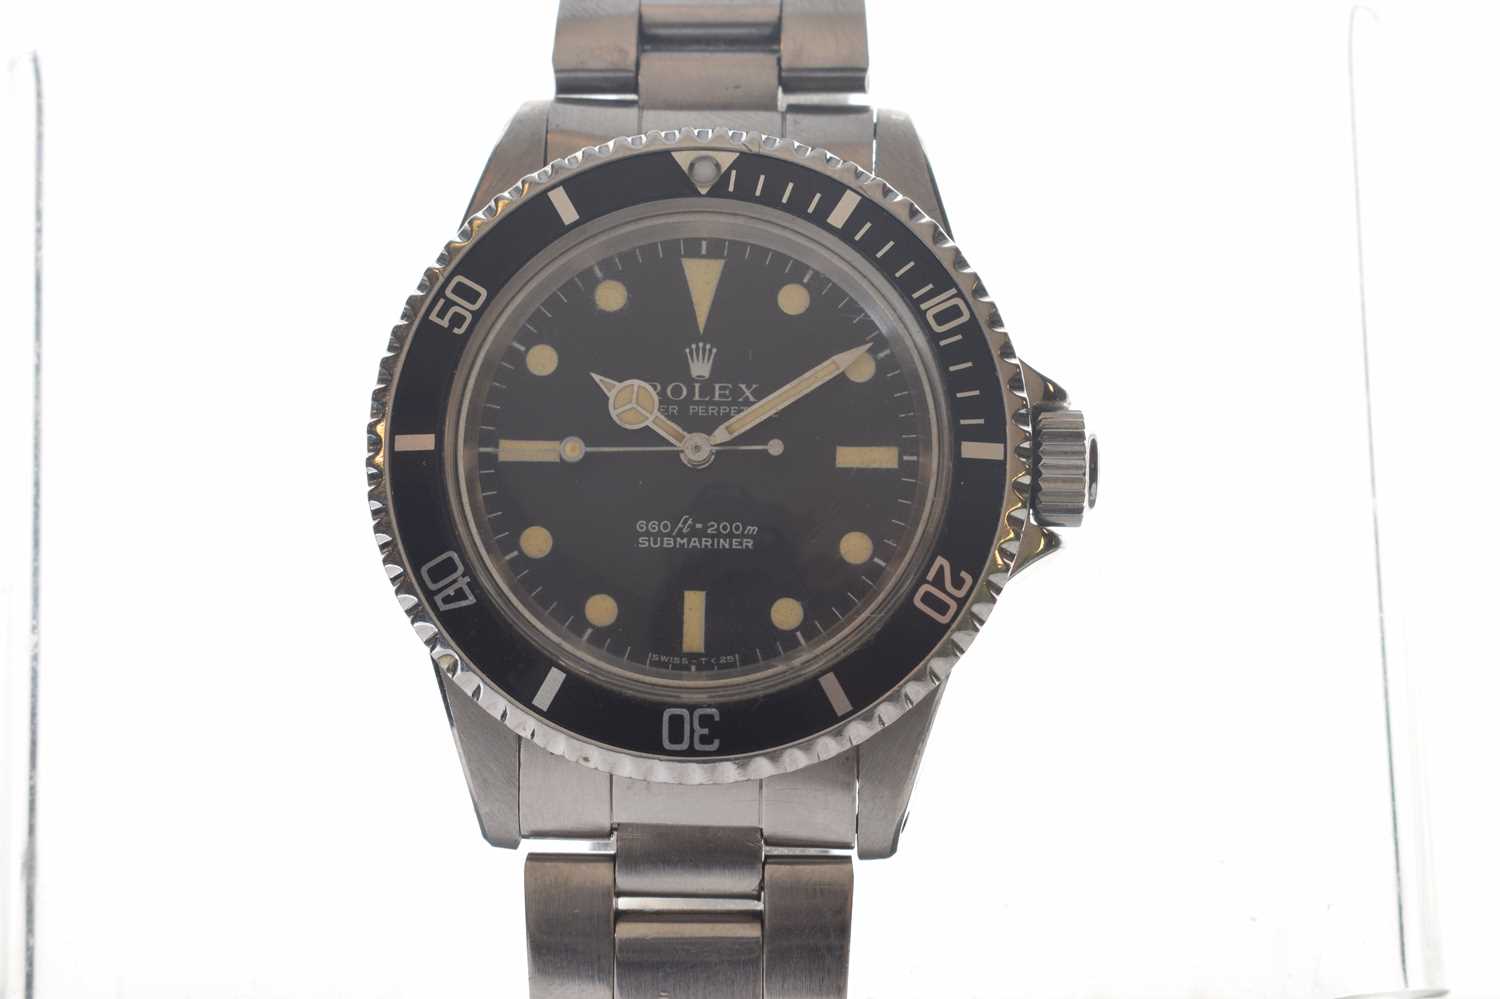 Rolex - Gentleman's Oyster Perpetual Submariner wristwatch, ref.5513 - Image 3 of 38